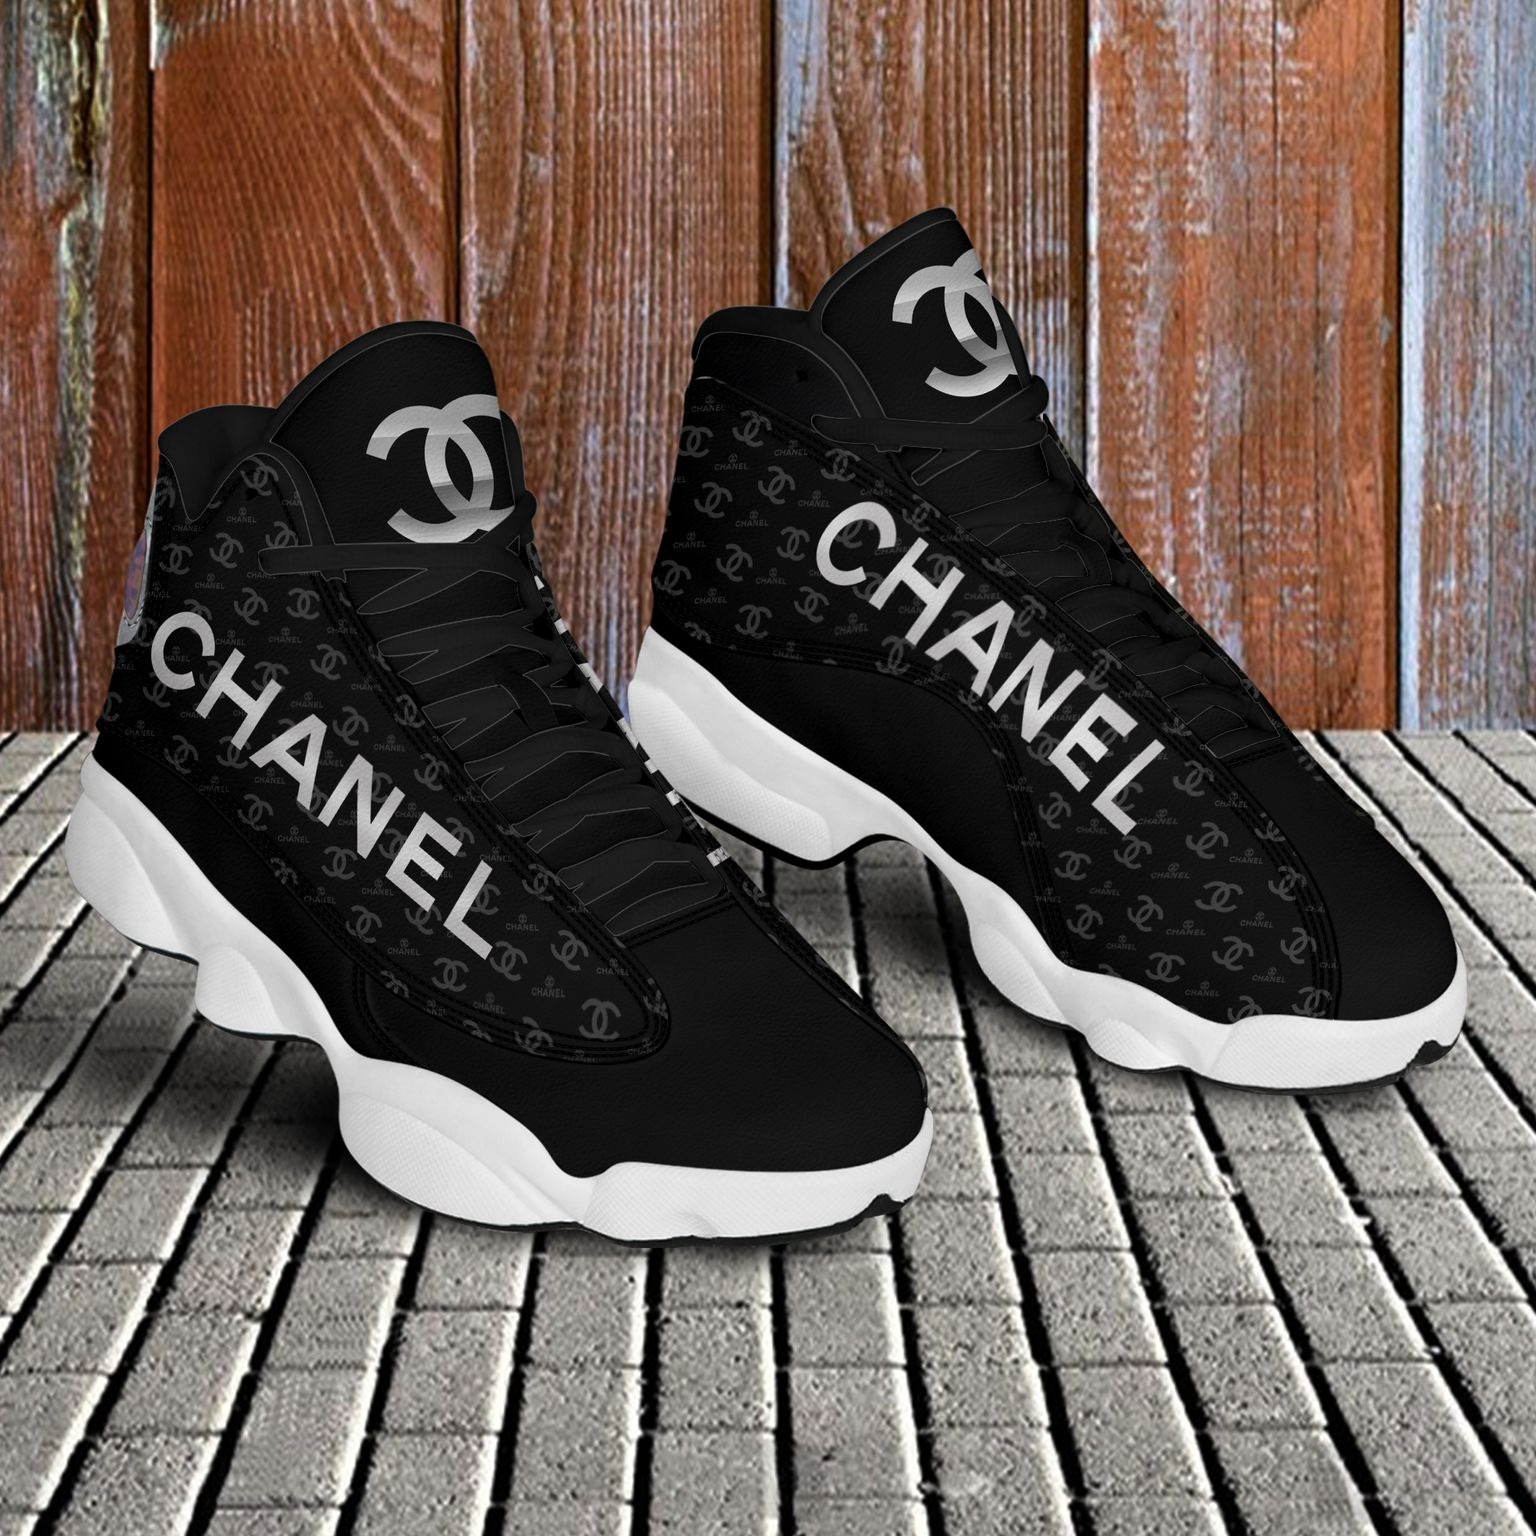 Chanel Air Jordan 13 Sneaker D2302 JD14034 – Let the colors inspire you!